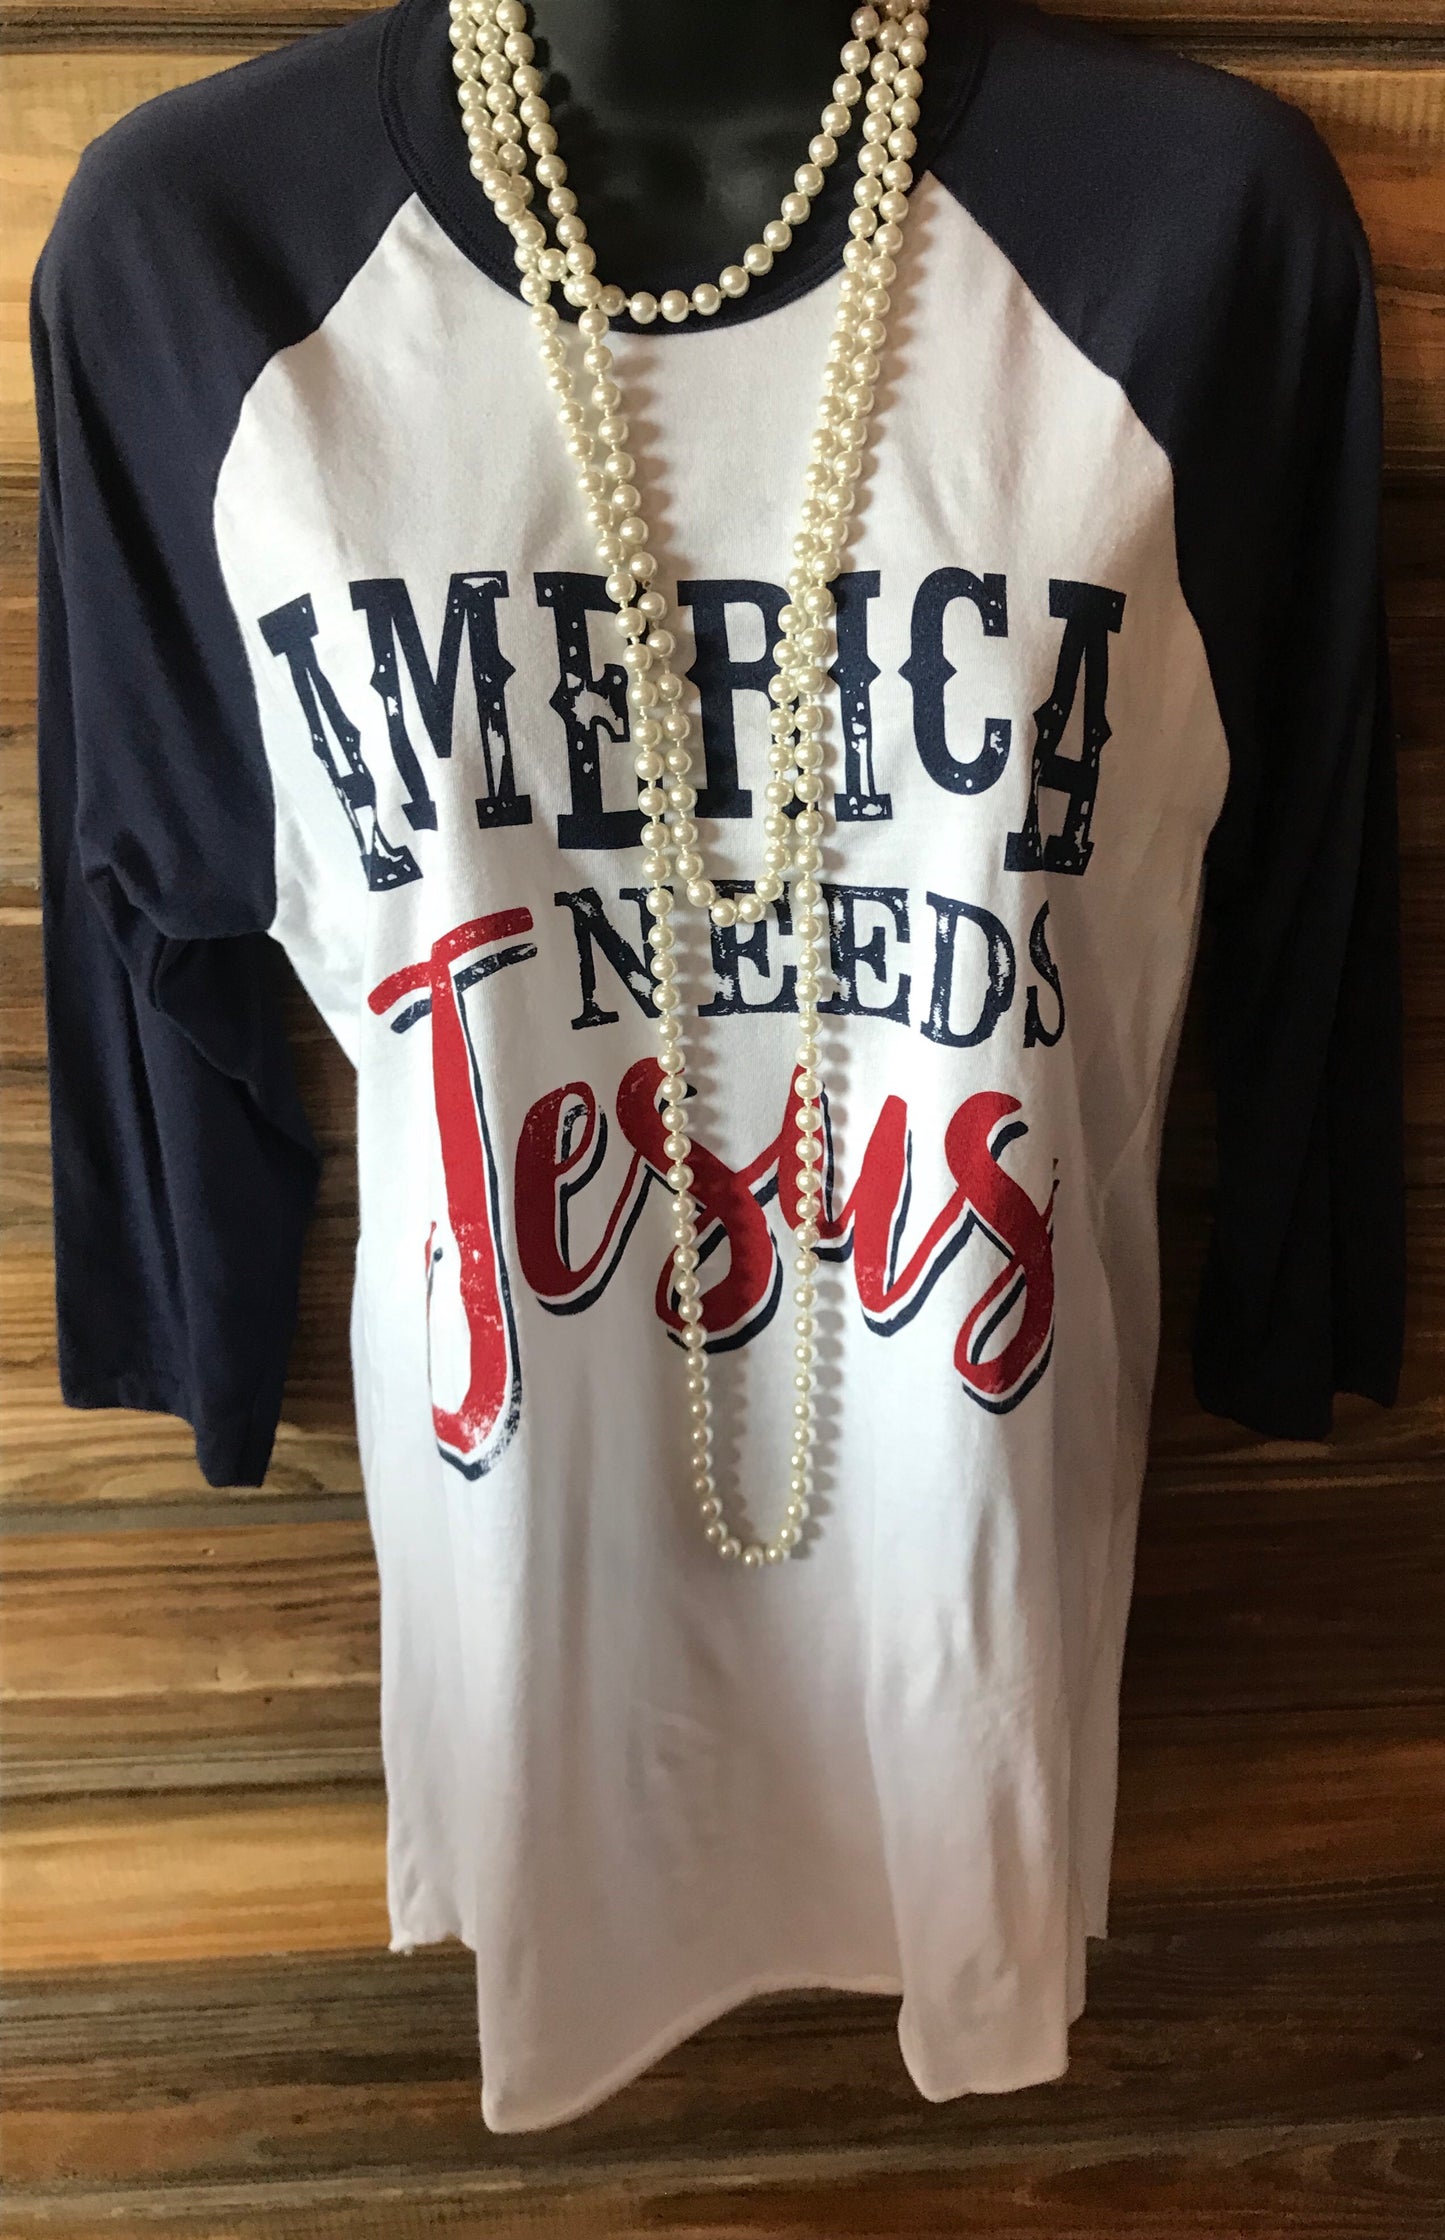 America Needs Jesus tee - The Desert Paintbrush